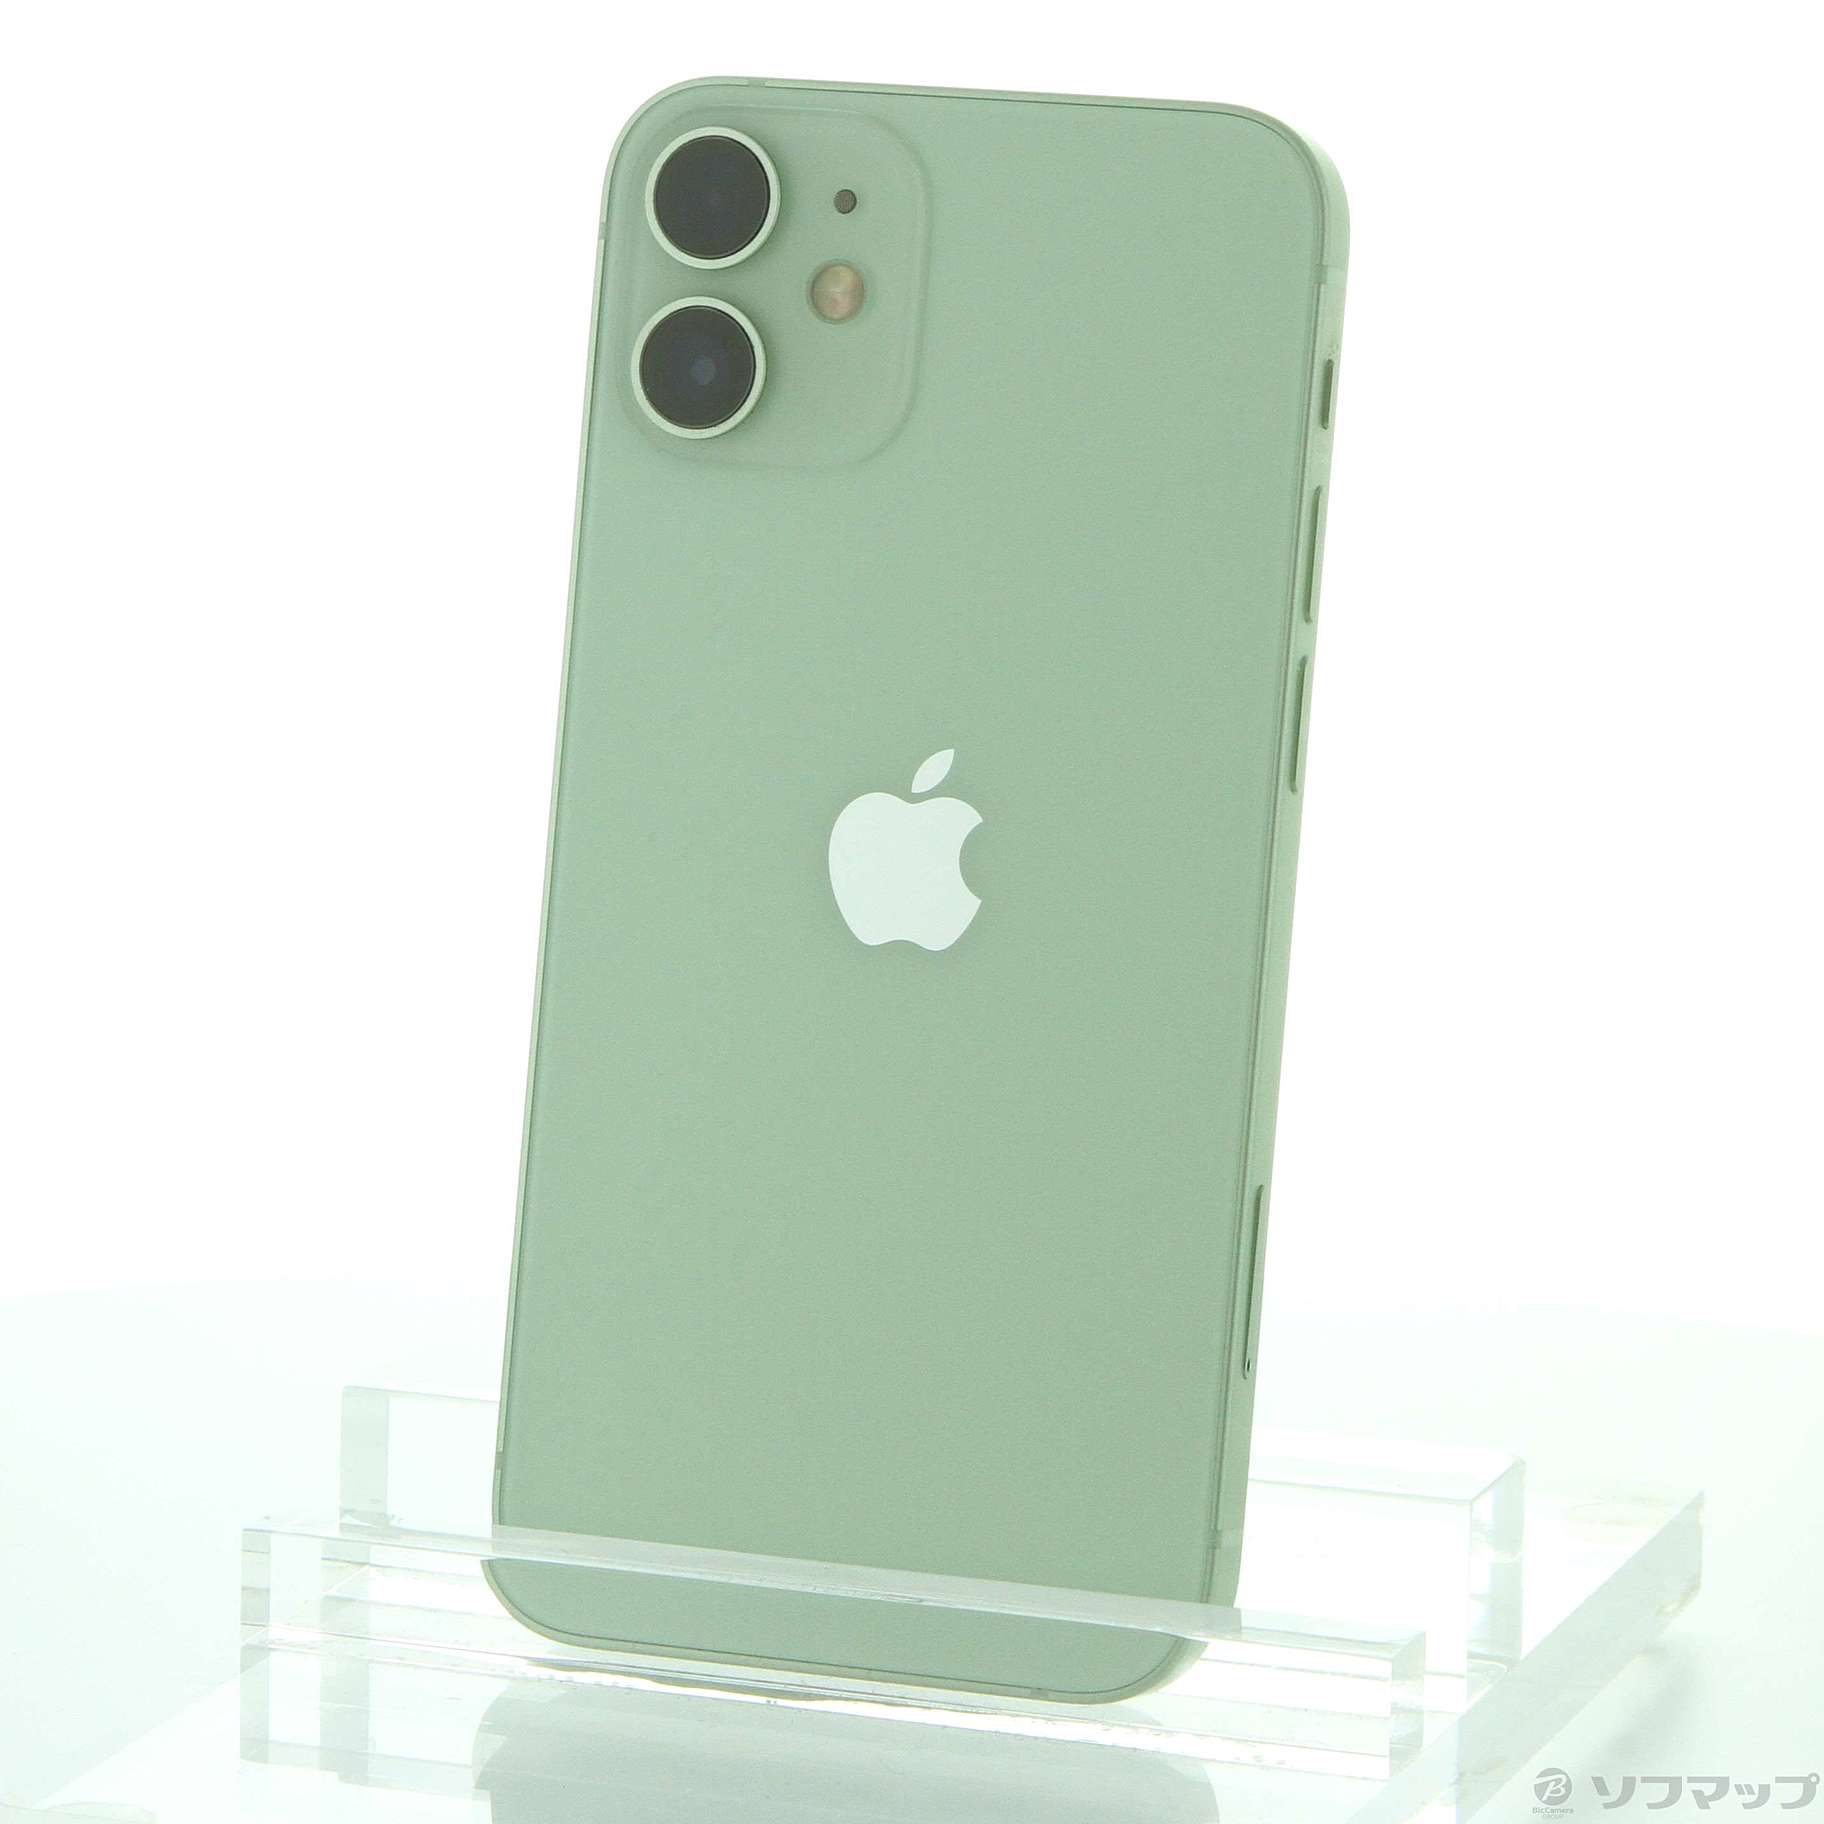 iPhone 12 mini グリーン 64 GB SIMフリー-